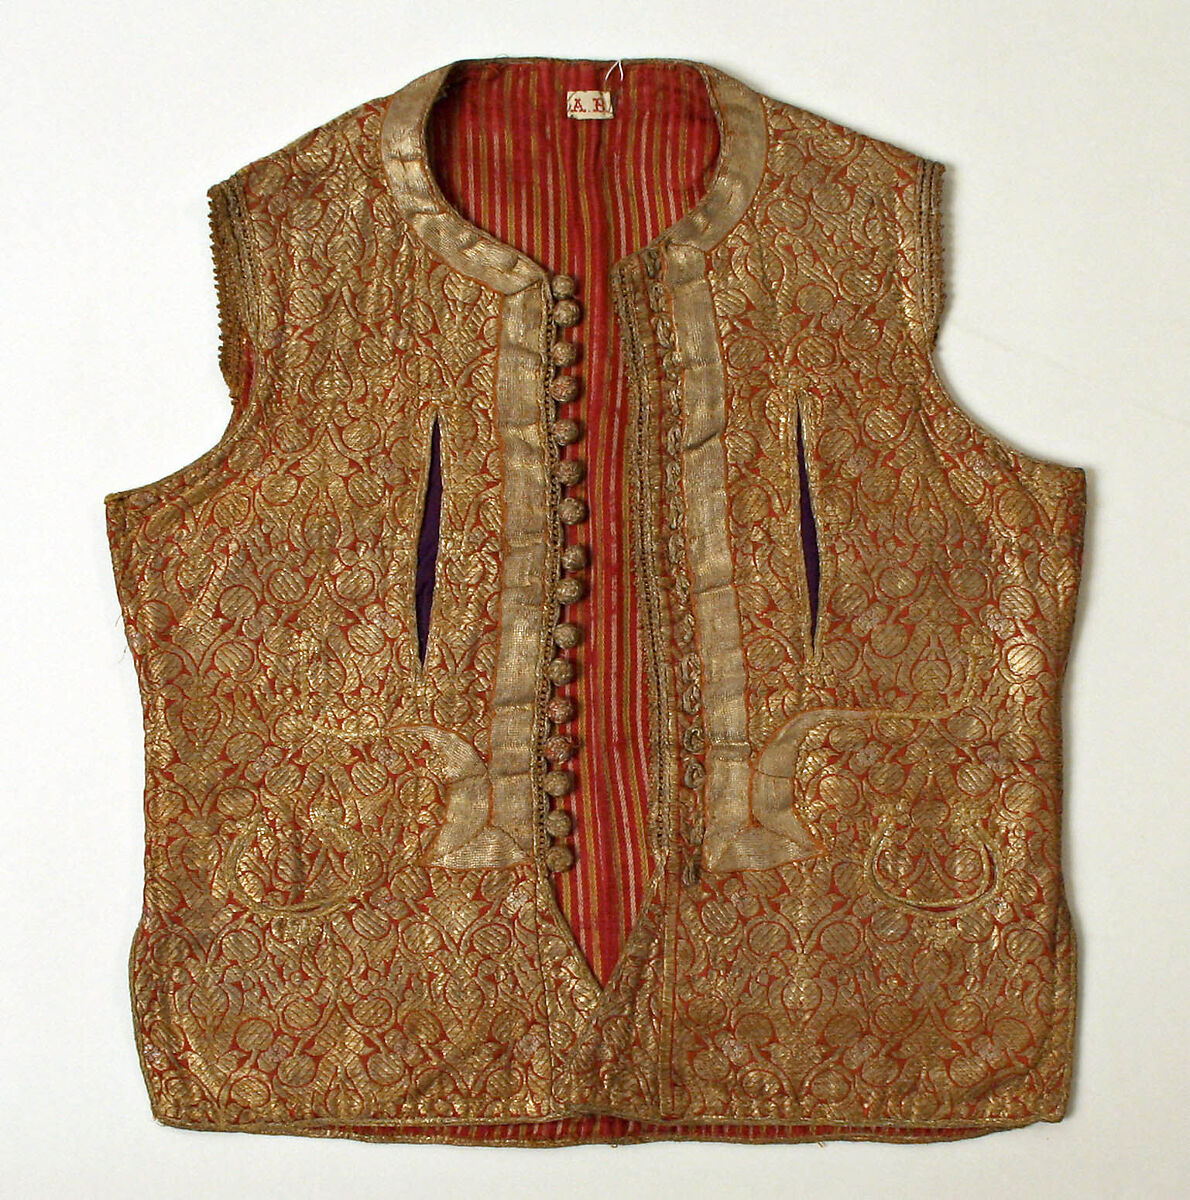 Child's Waistcoat, Silk, metal wrapped thread; brocaded 